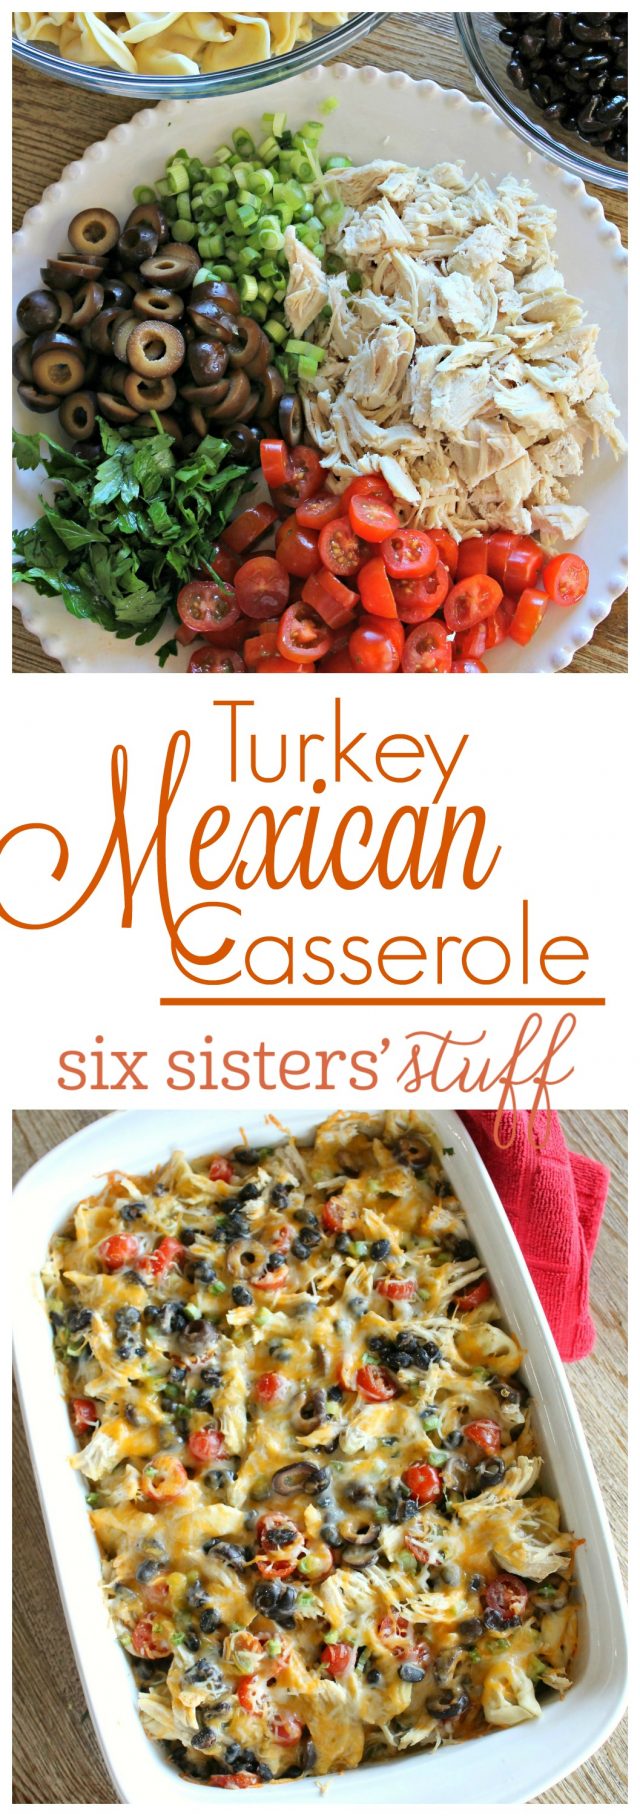 Turkey Mexican Casserole | Six Sisters' Stuff